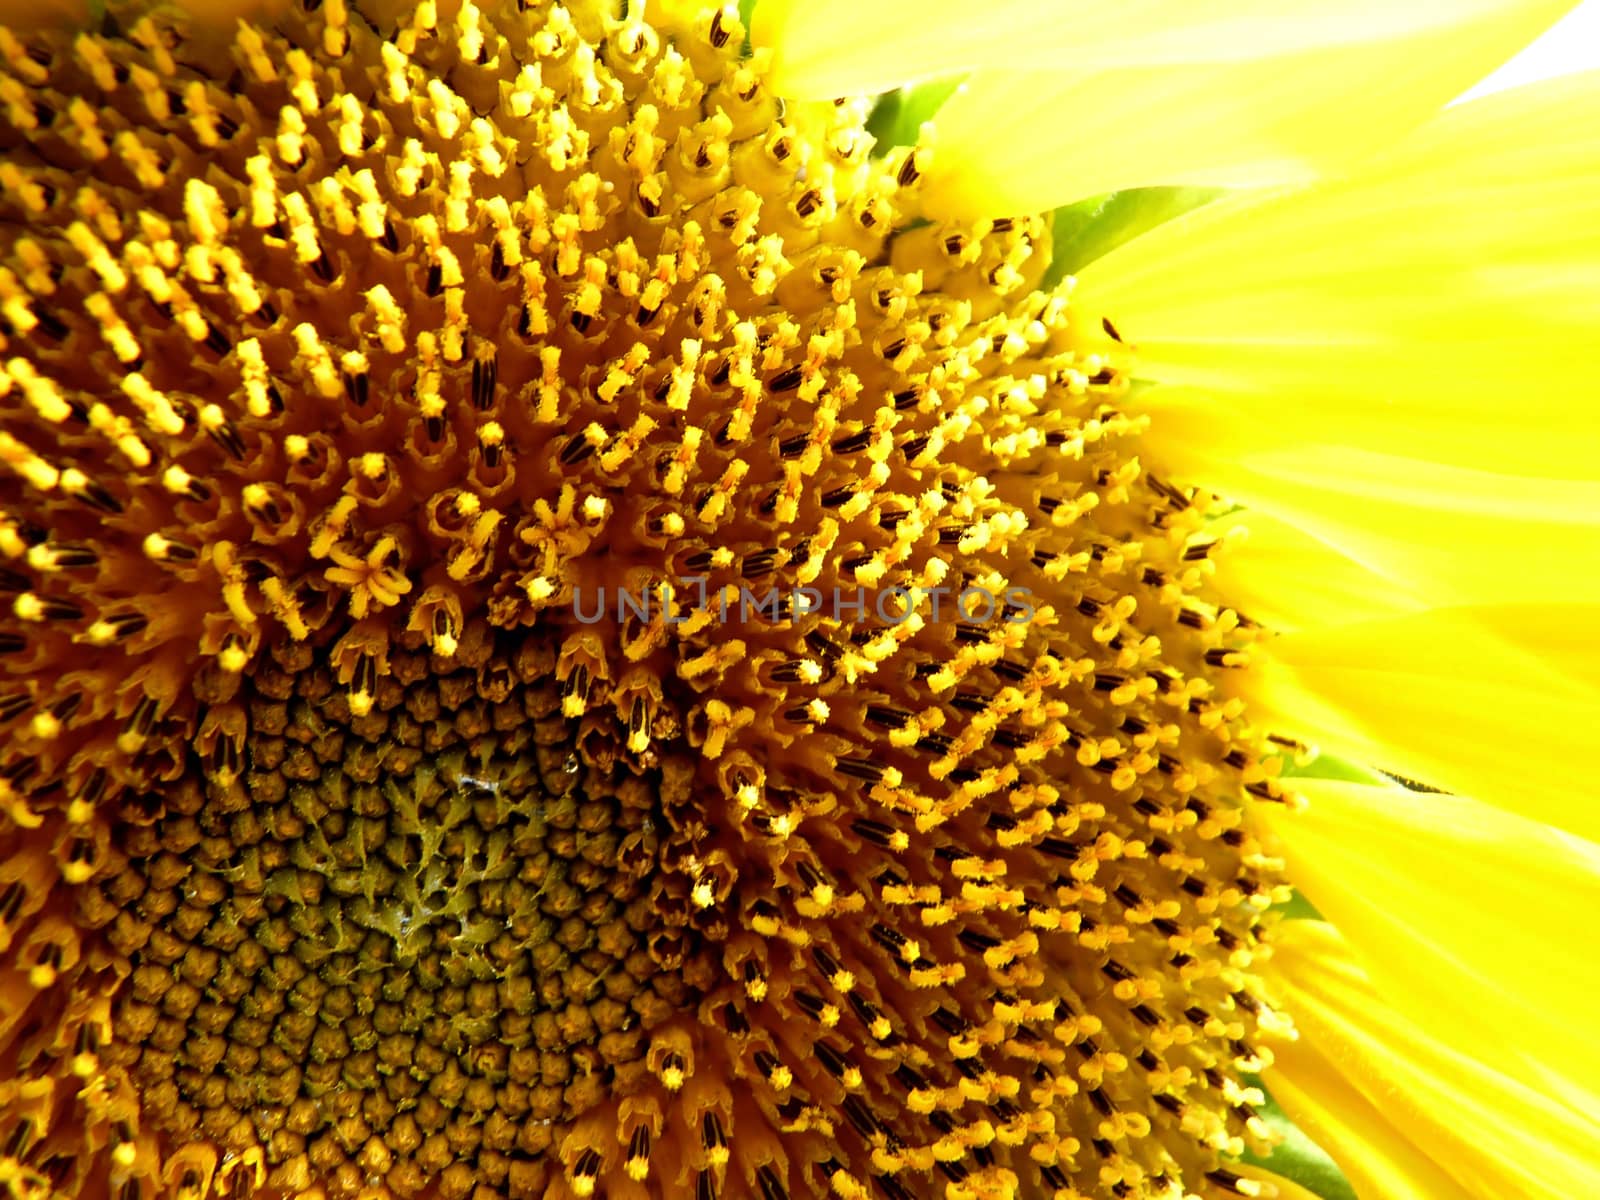 Sunflower core by Vadimdem